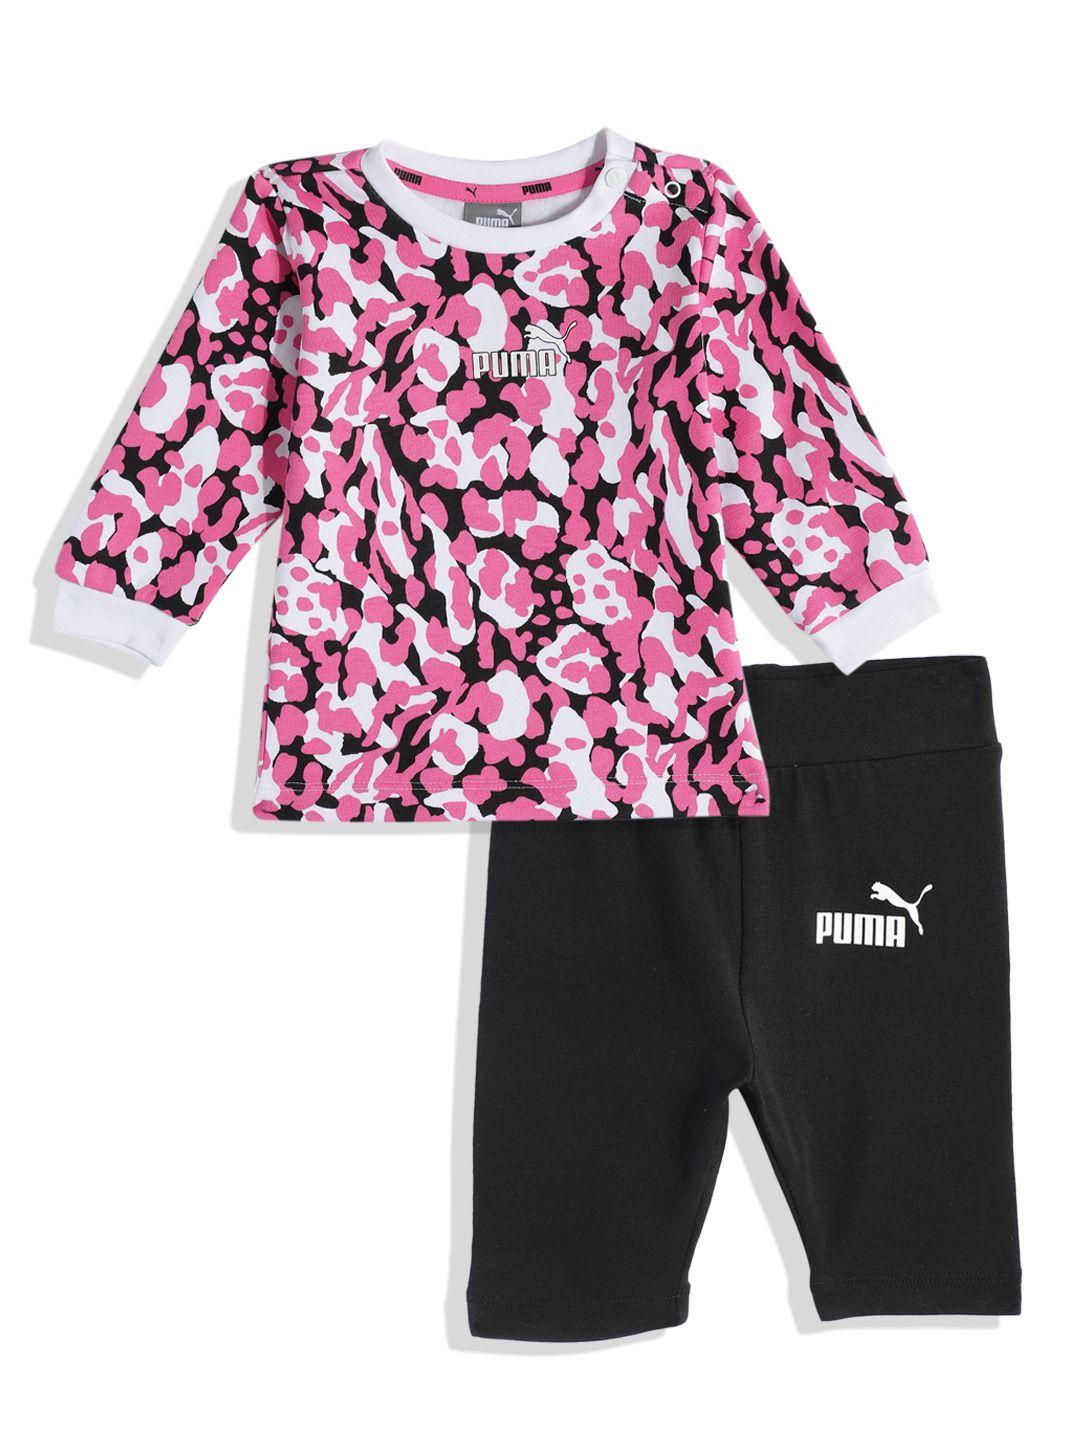 puma-unisex-kids-pink-&-black-printed-t-shirt-with-leggings-set